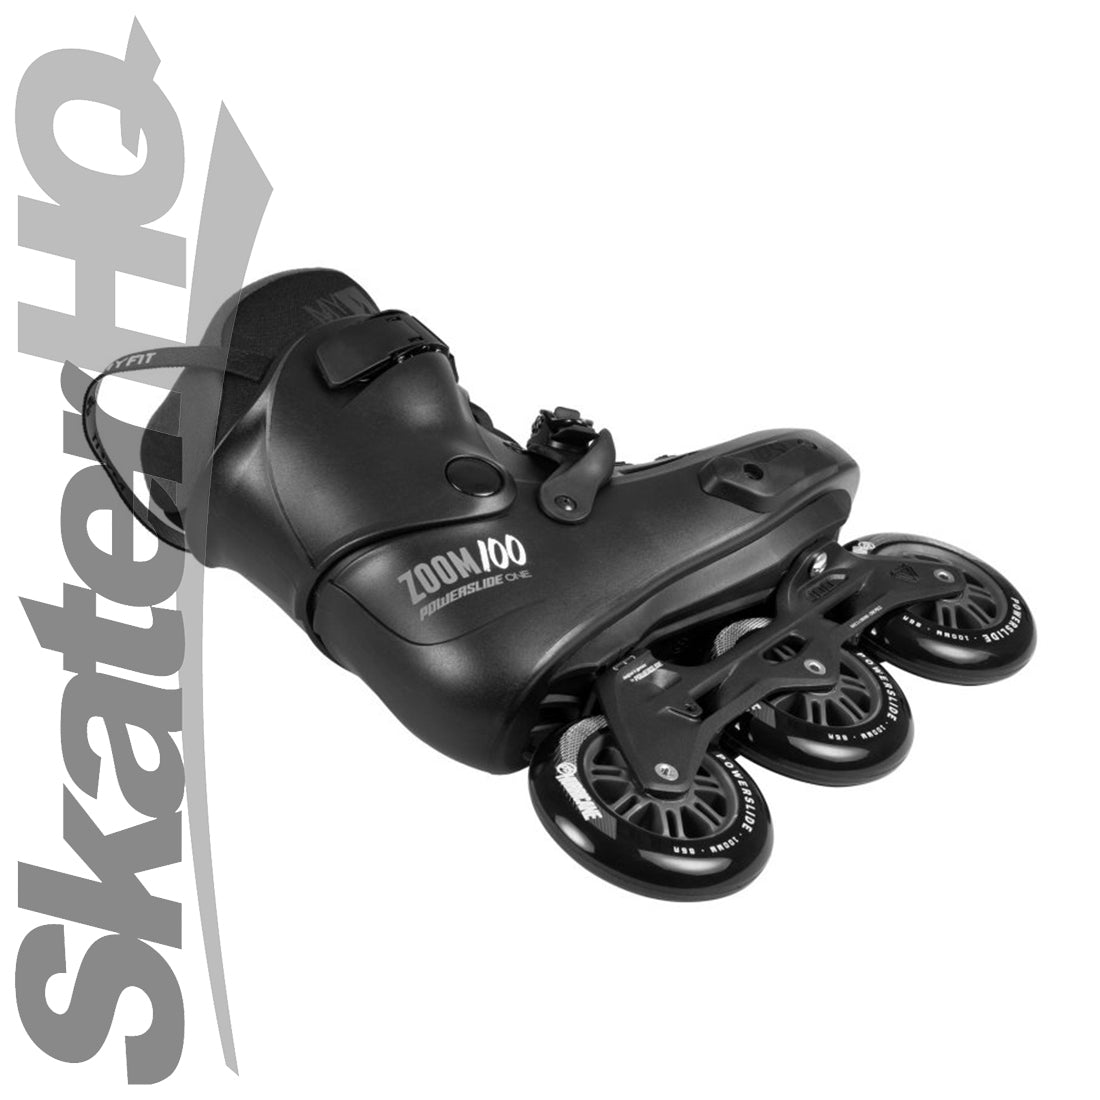 Powerslide Zoom Pro 100 EU45-47 11-12.5US Inline Rec Skates